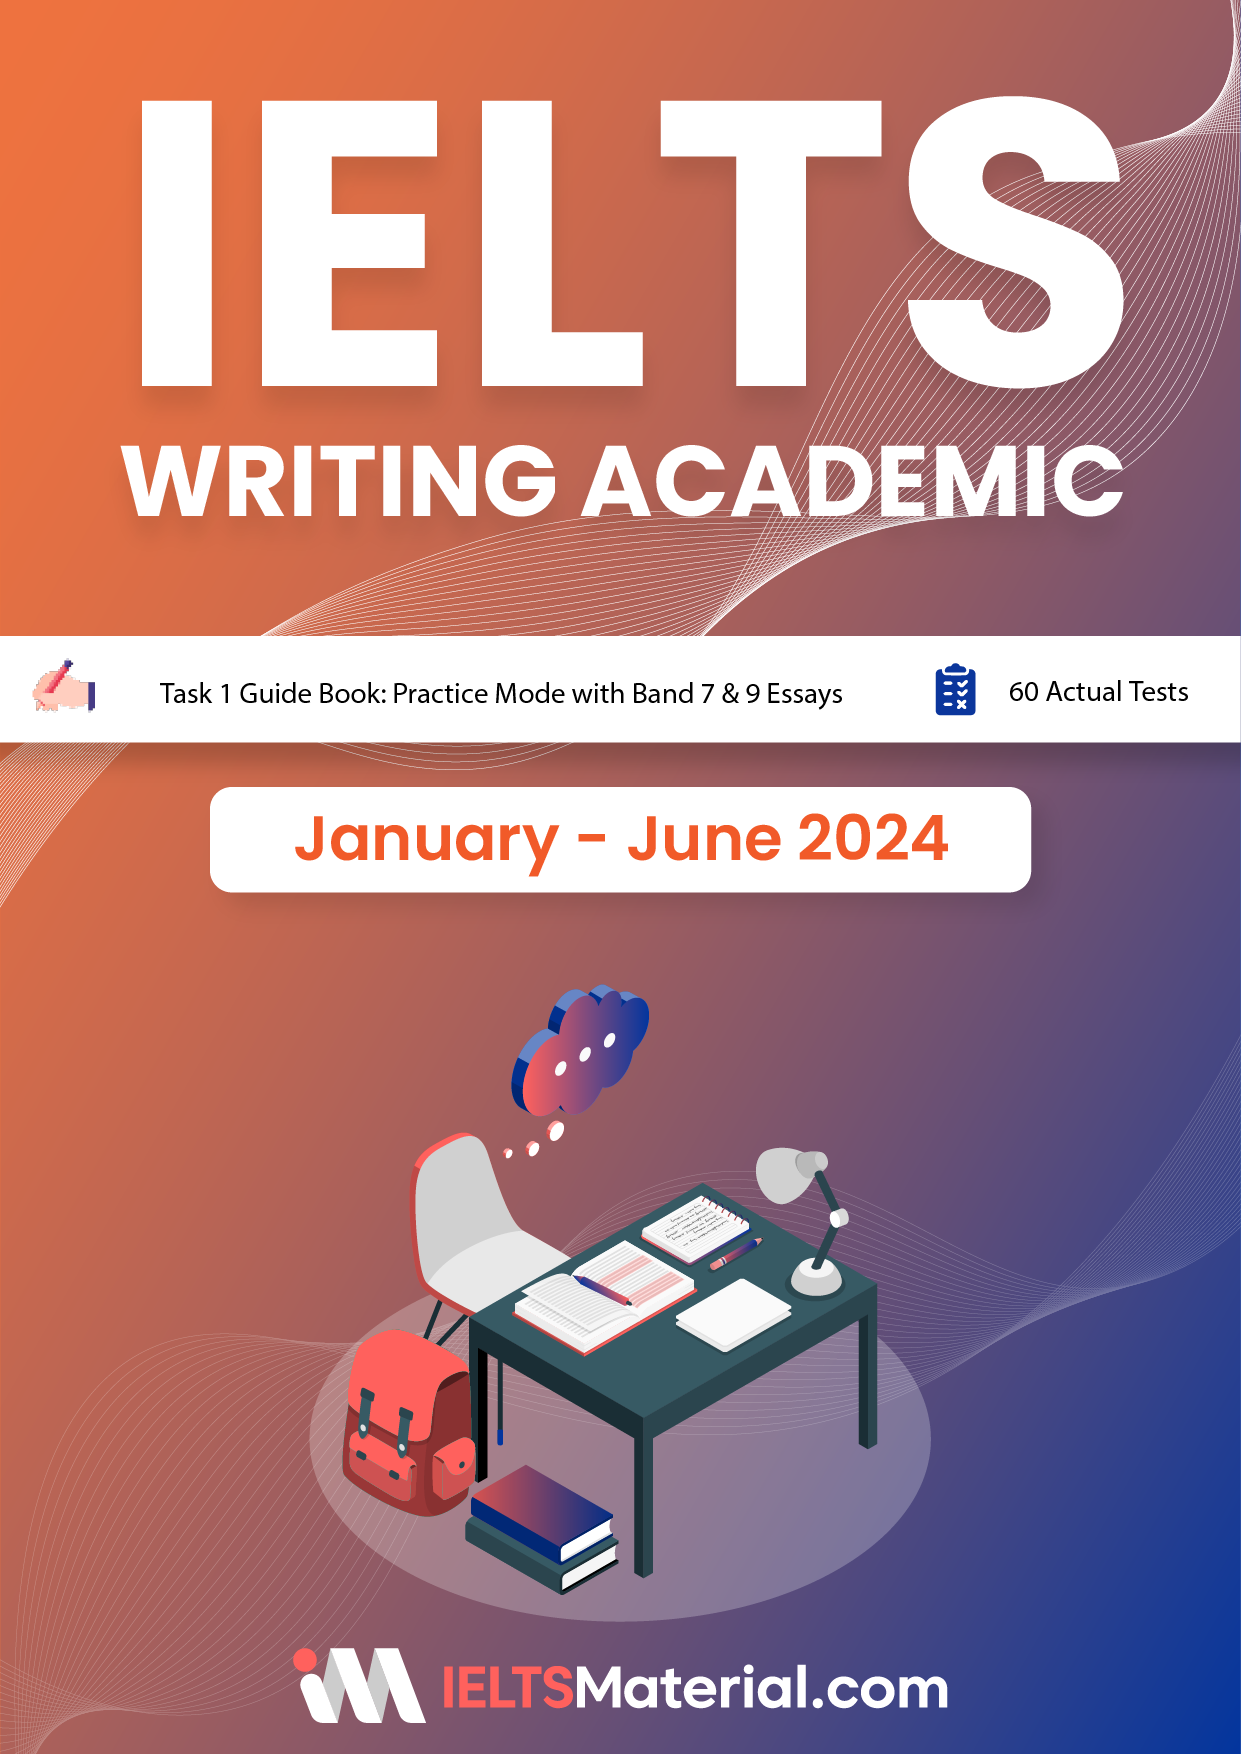 IELTS (Academic) Writing Actual Tests eBook Combo (January-June 2024) [Task 1+ Task 2]